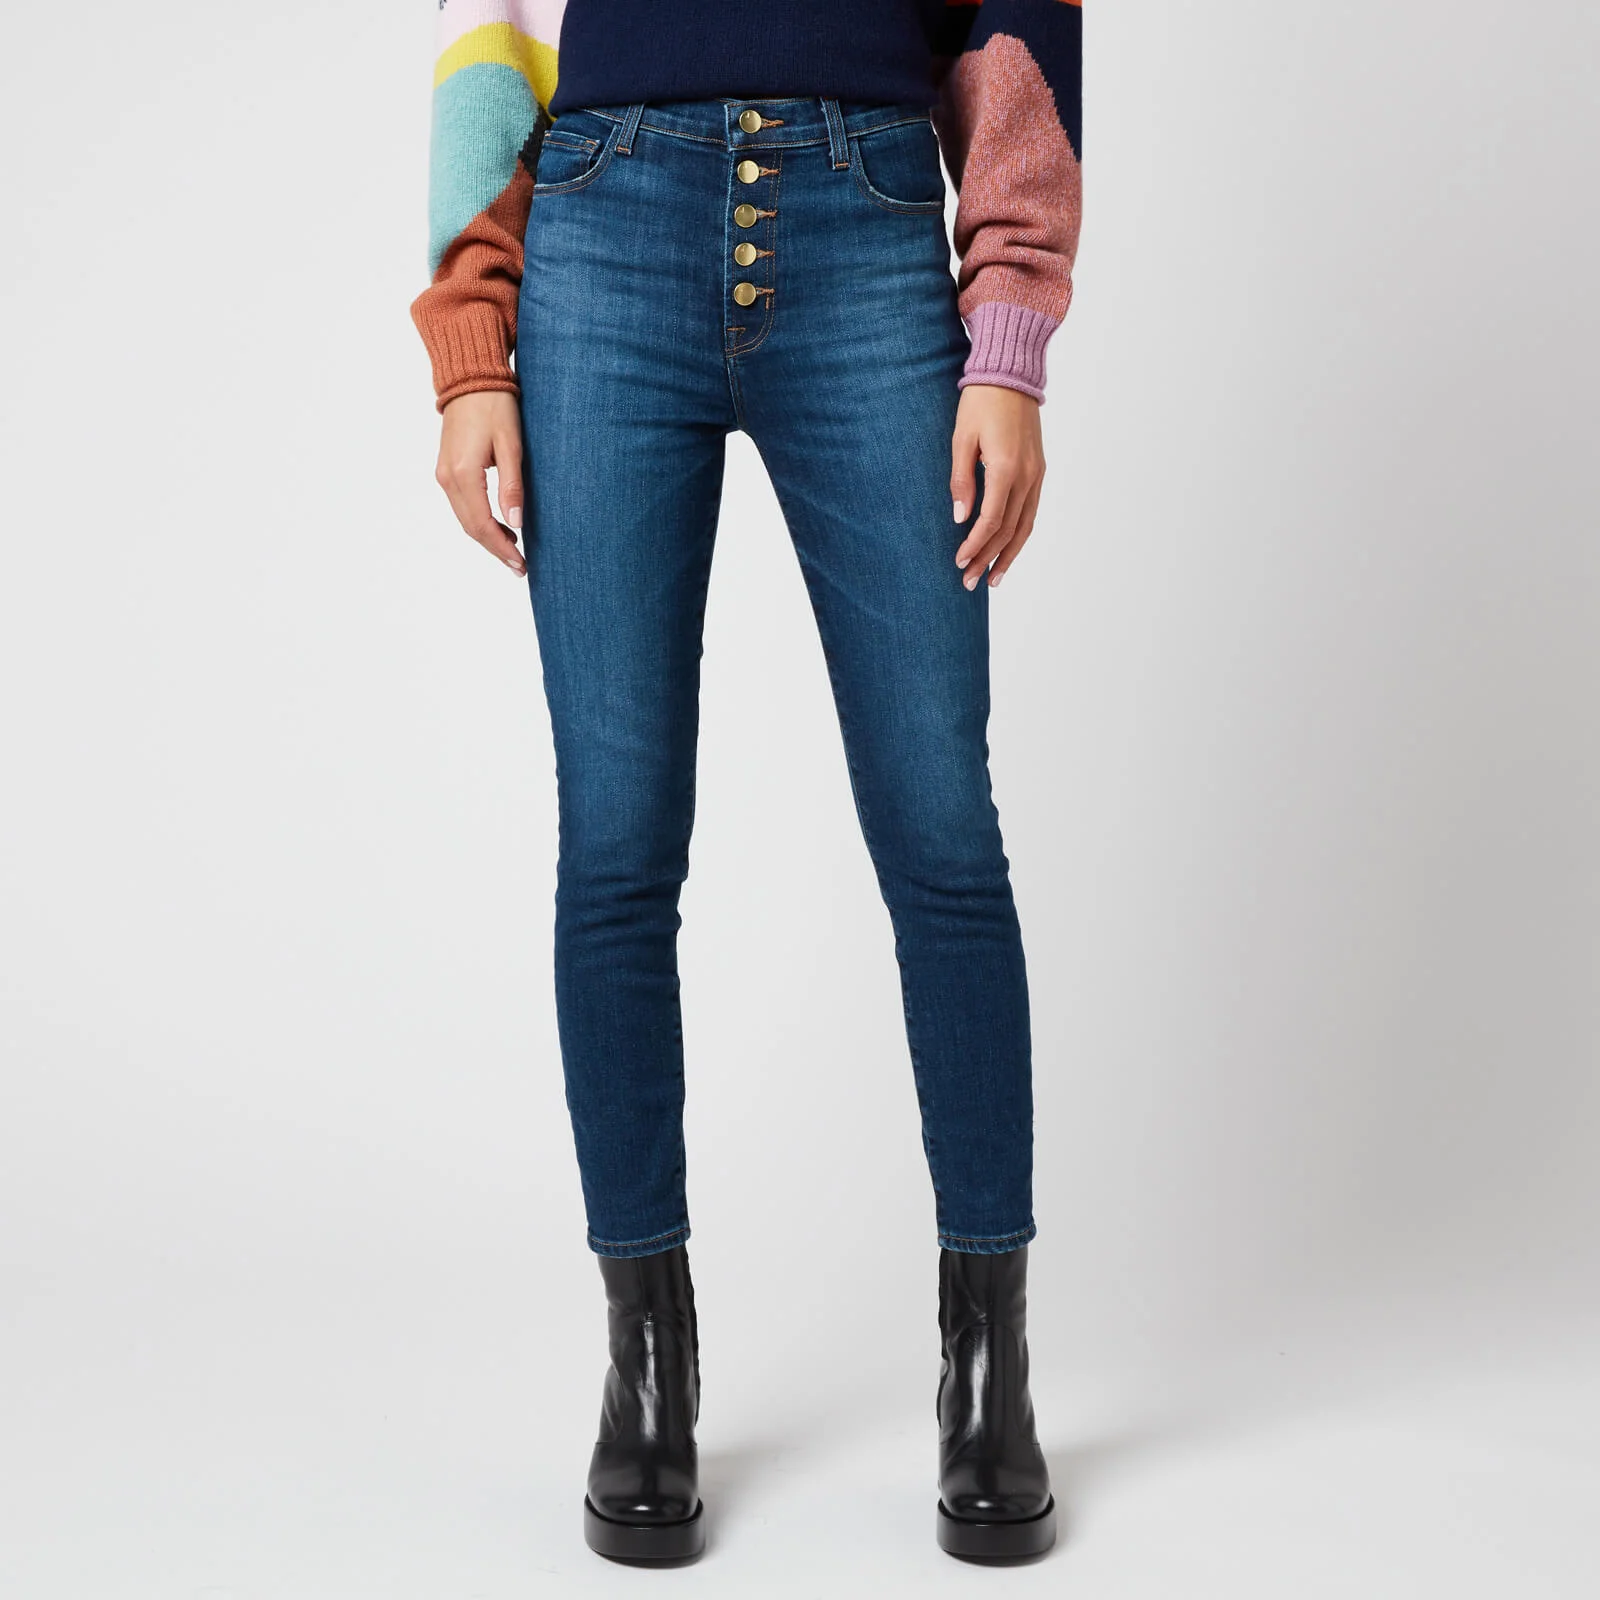 J Brand Women's Lillie High Rise Crop Skinny Jeans - Arcade Image 1